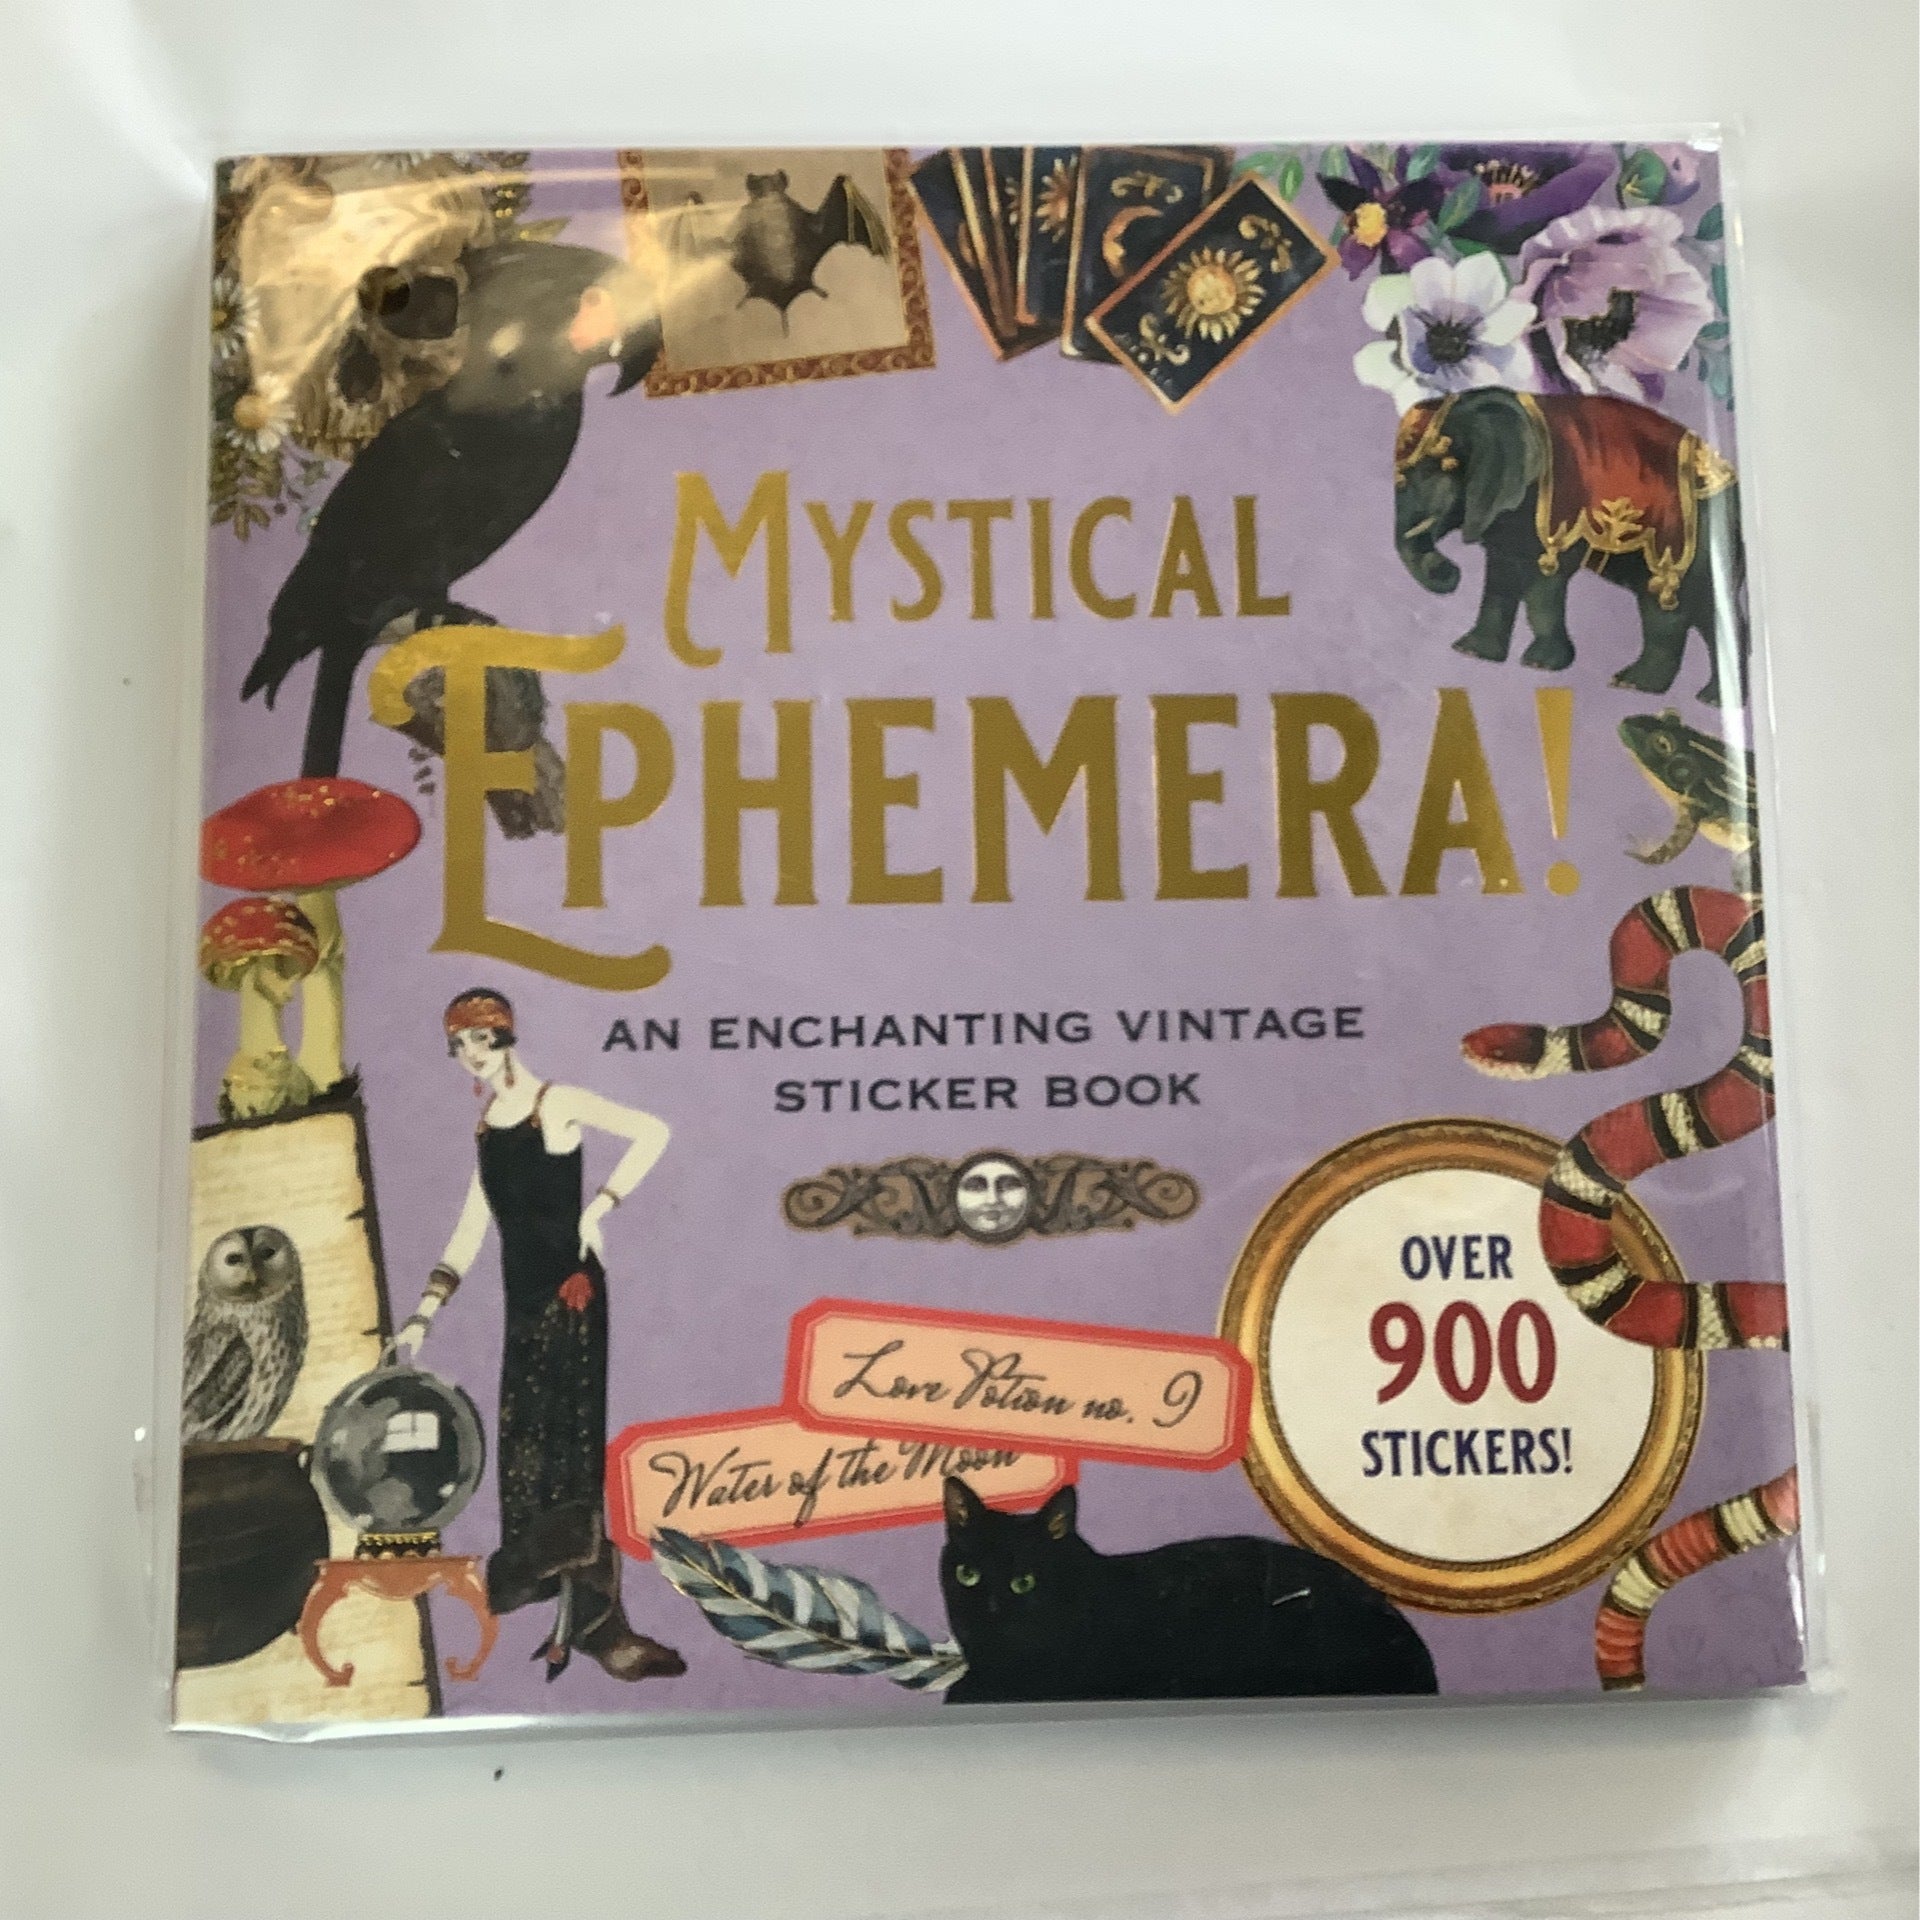 Mystical Ephemera Sticker Book 